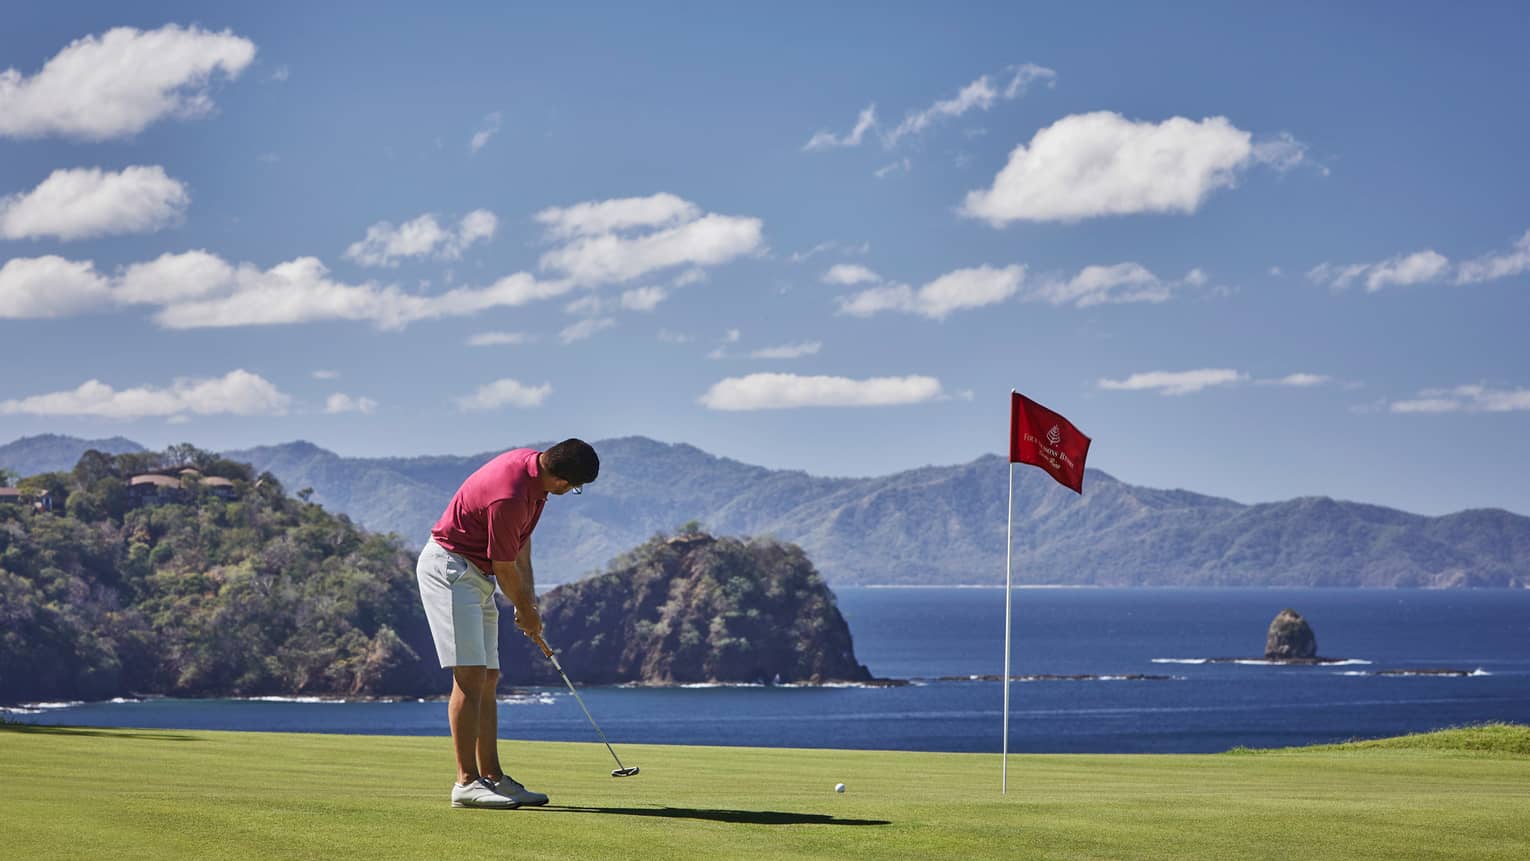 Man prepares to putt near red flag on golf green overlooking ocean 